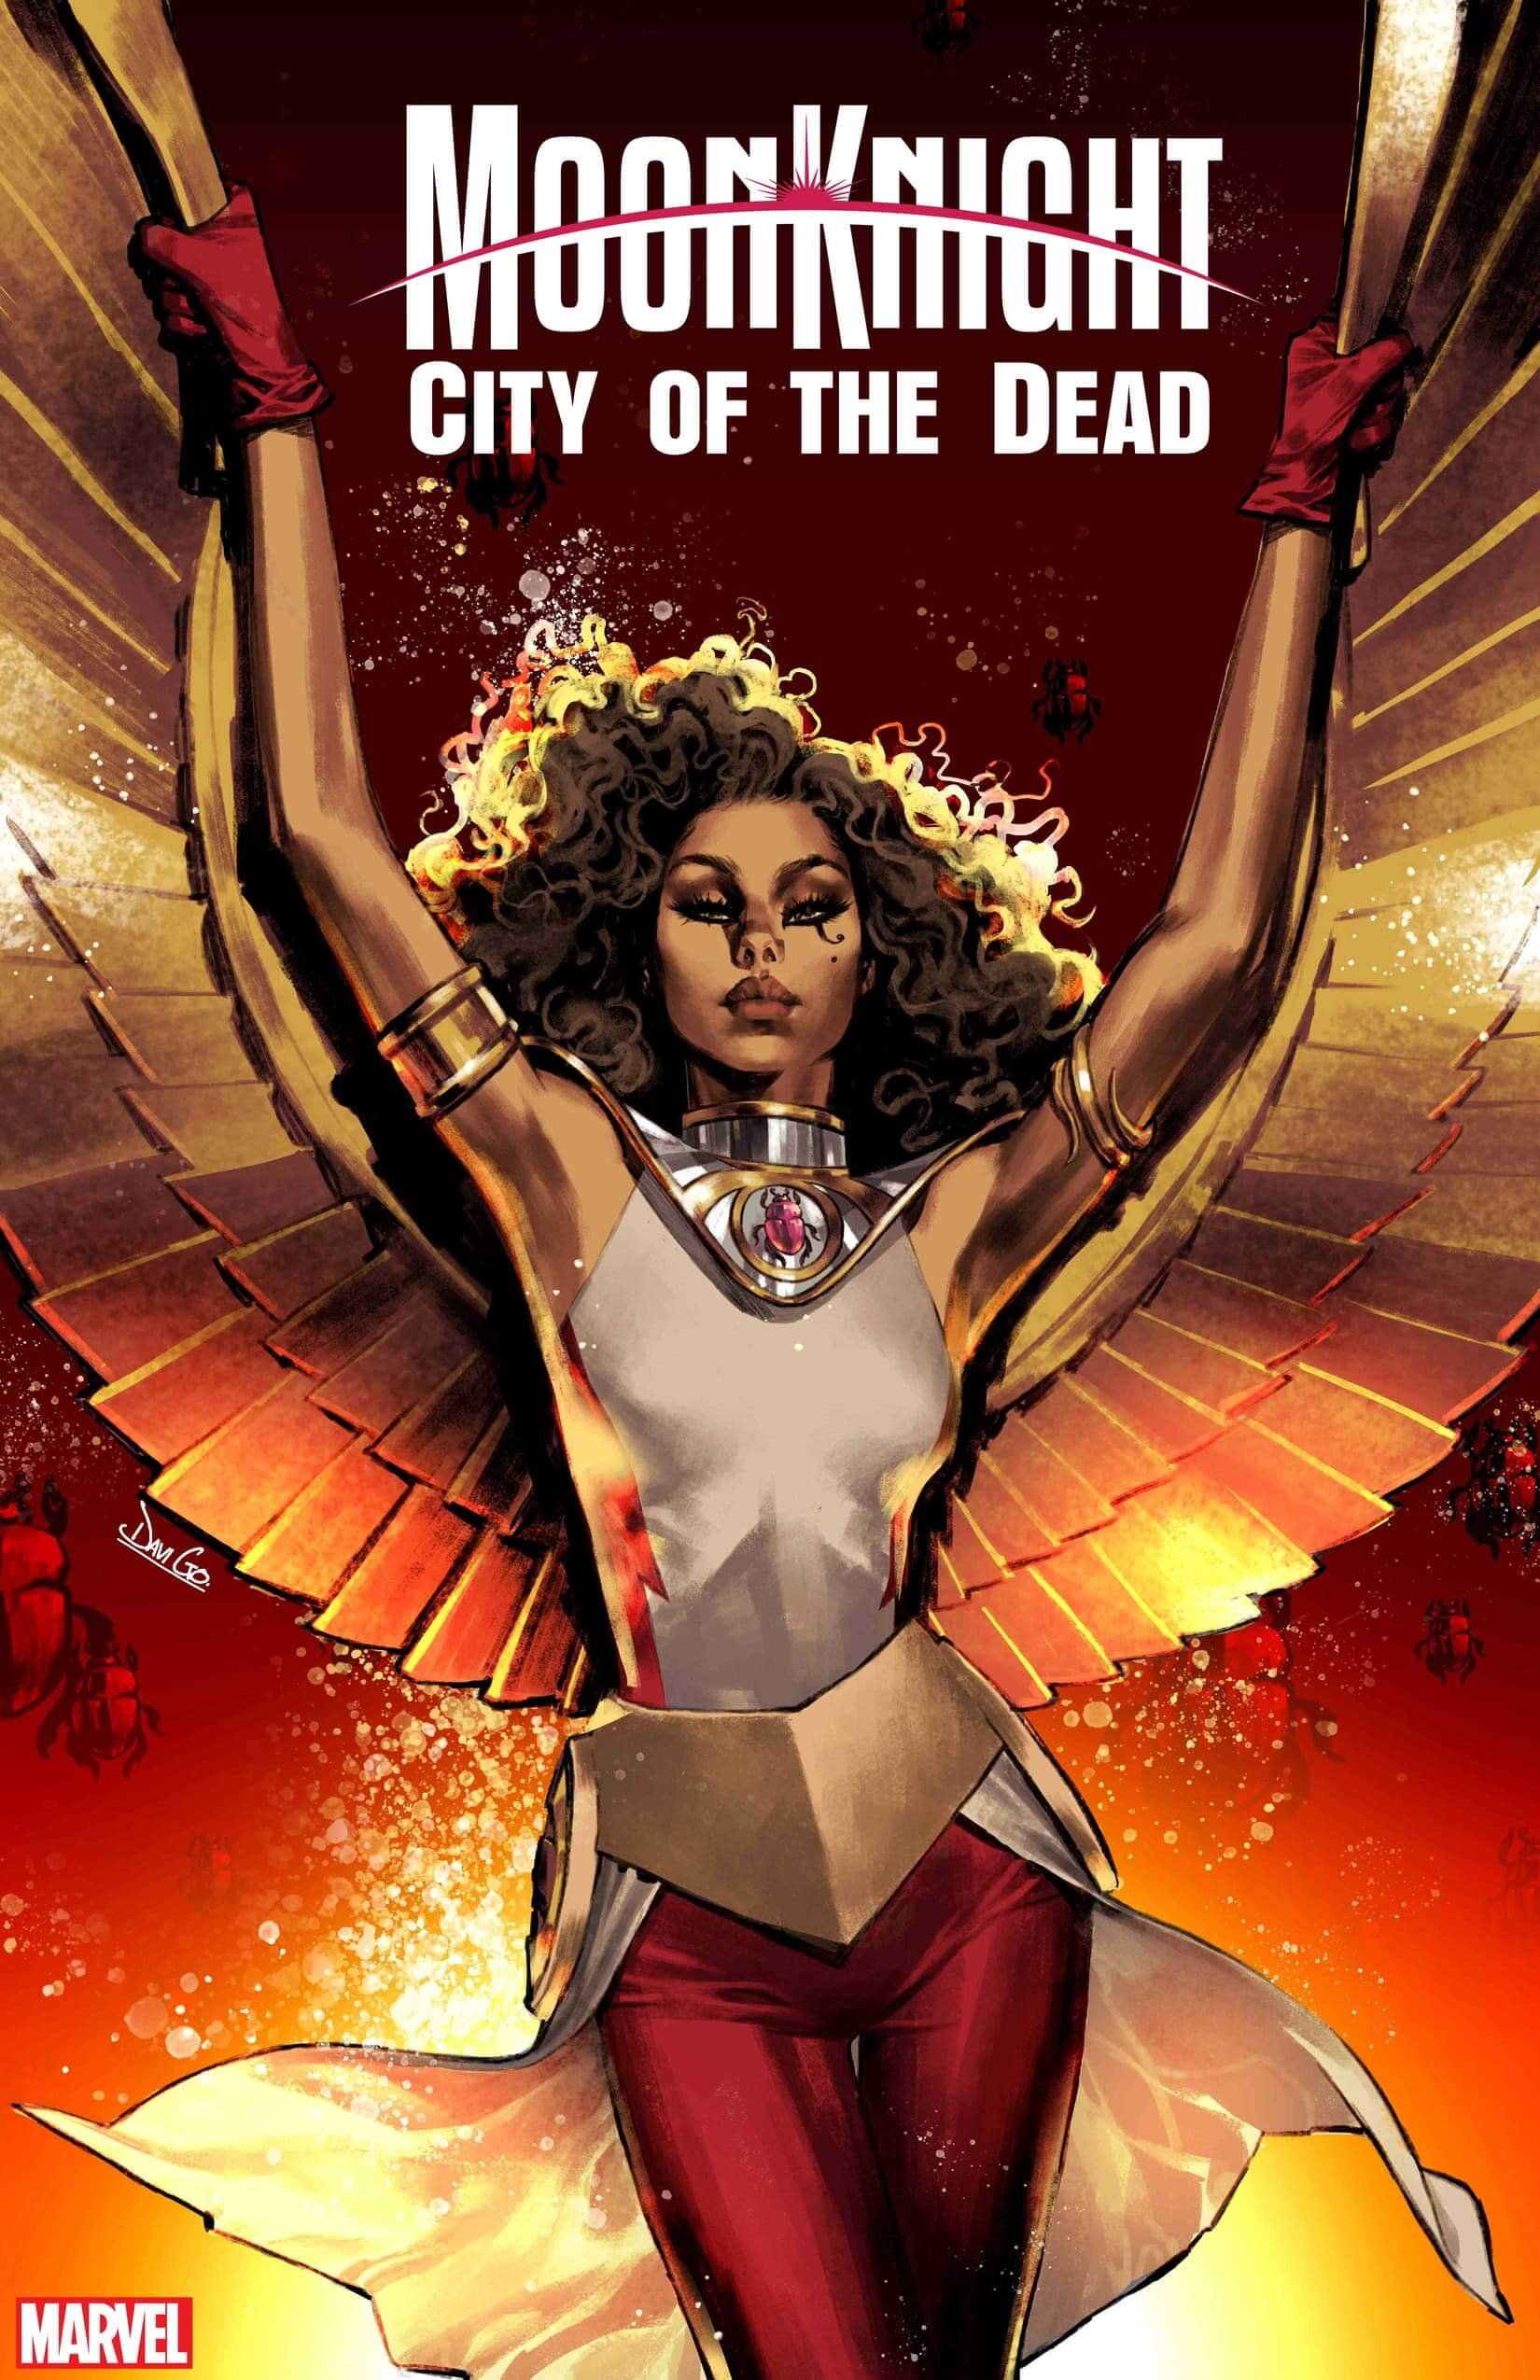 Couverture variante de Moon Knight : City of the Dead par David Go, avec Scarlet Scarab.